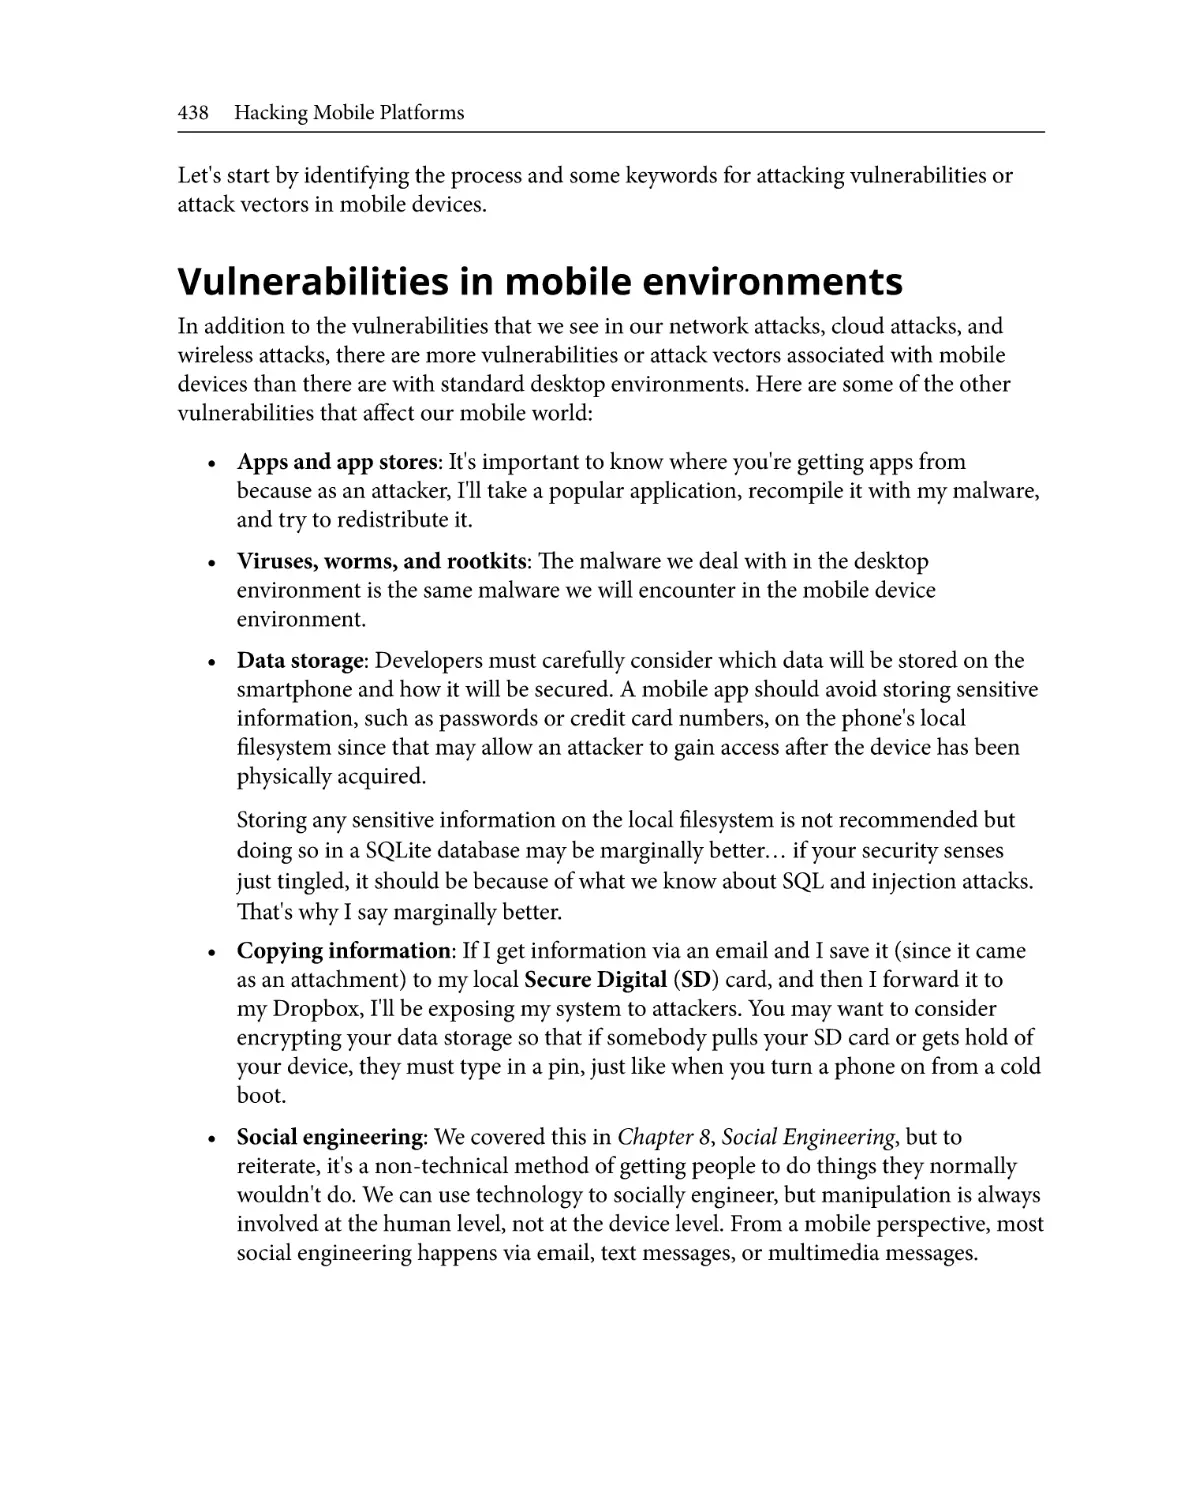 Vulnerabilities in mobile environments